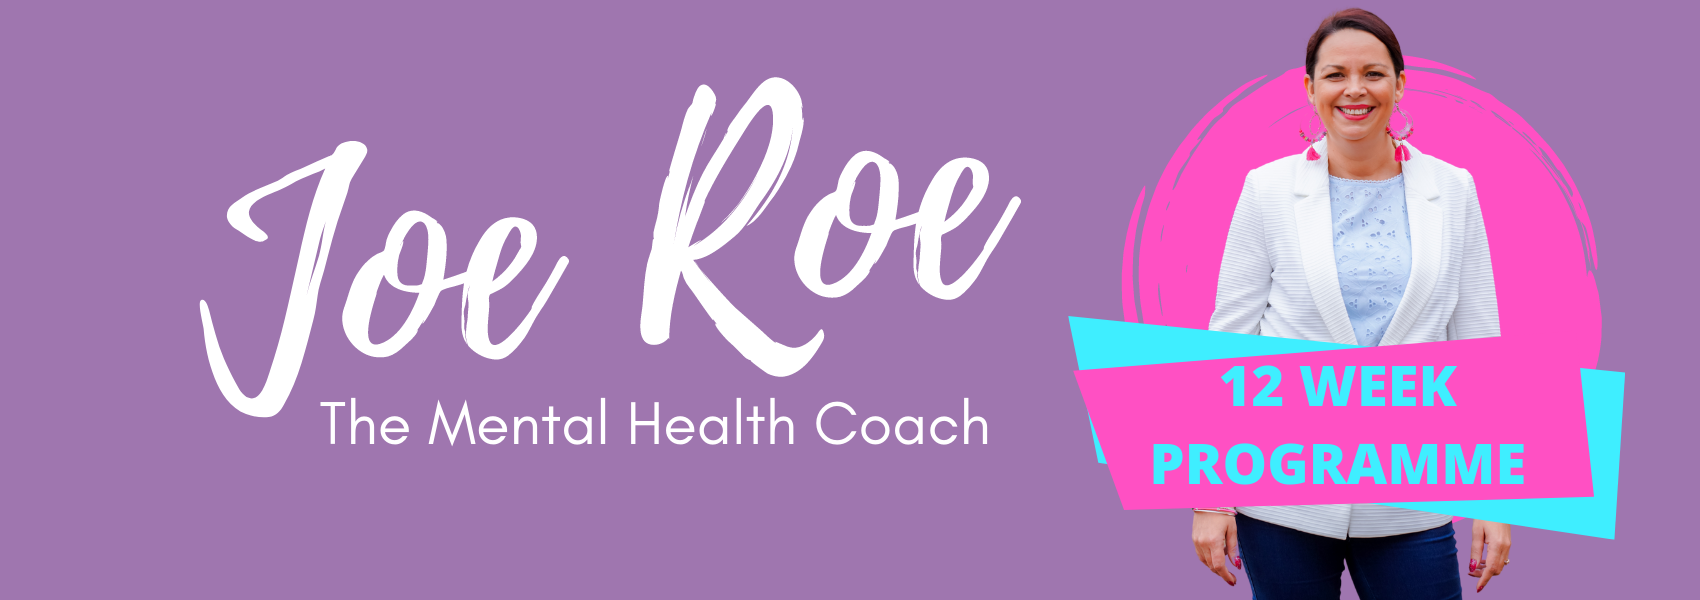 Header Image. Joe Roe, the Mental Health Coach. Joe smiles against a purple background. Banner for the 12 week Mojo Coaching Programme